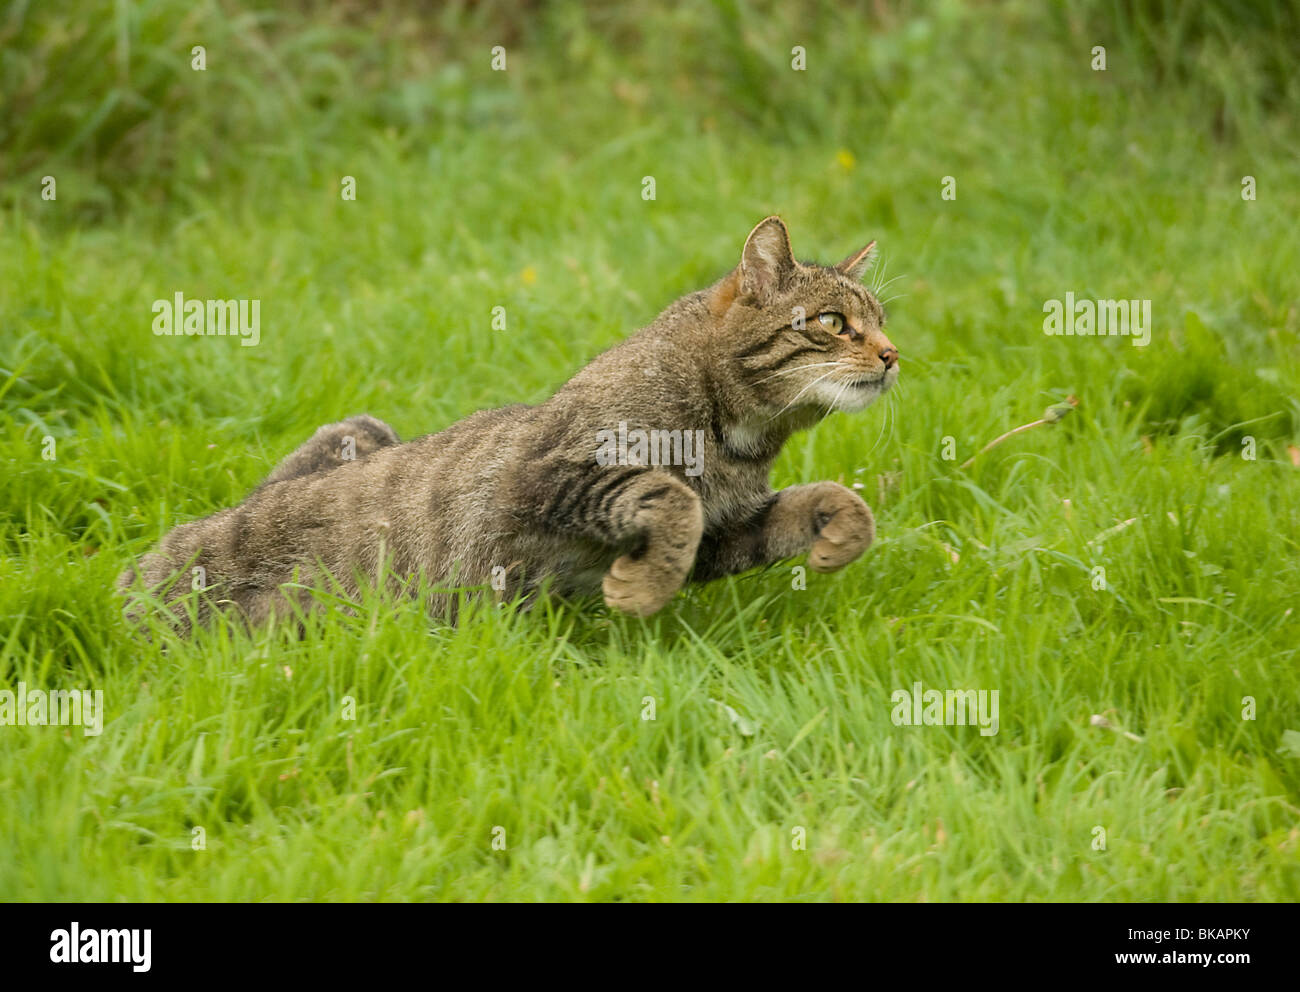 Gato salvaje, Felis silvestris, comienza a ejecutar Foto de stock